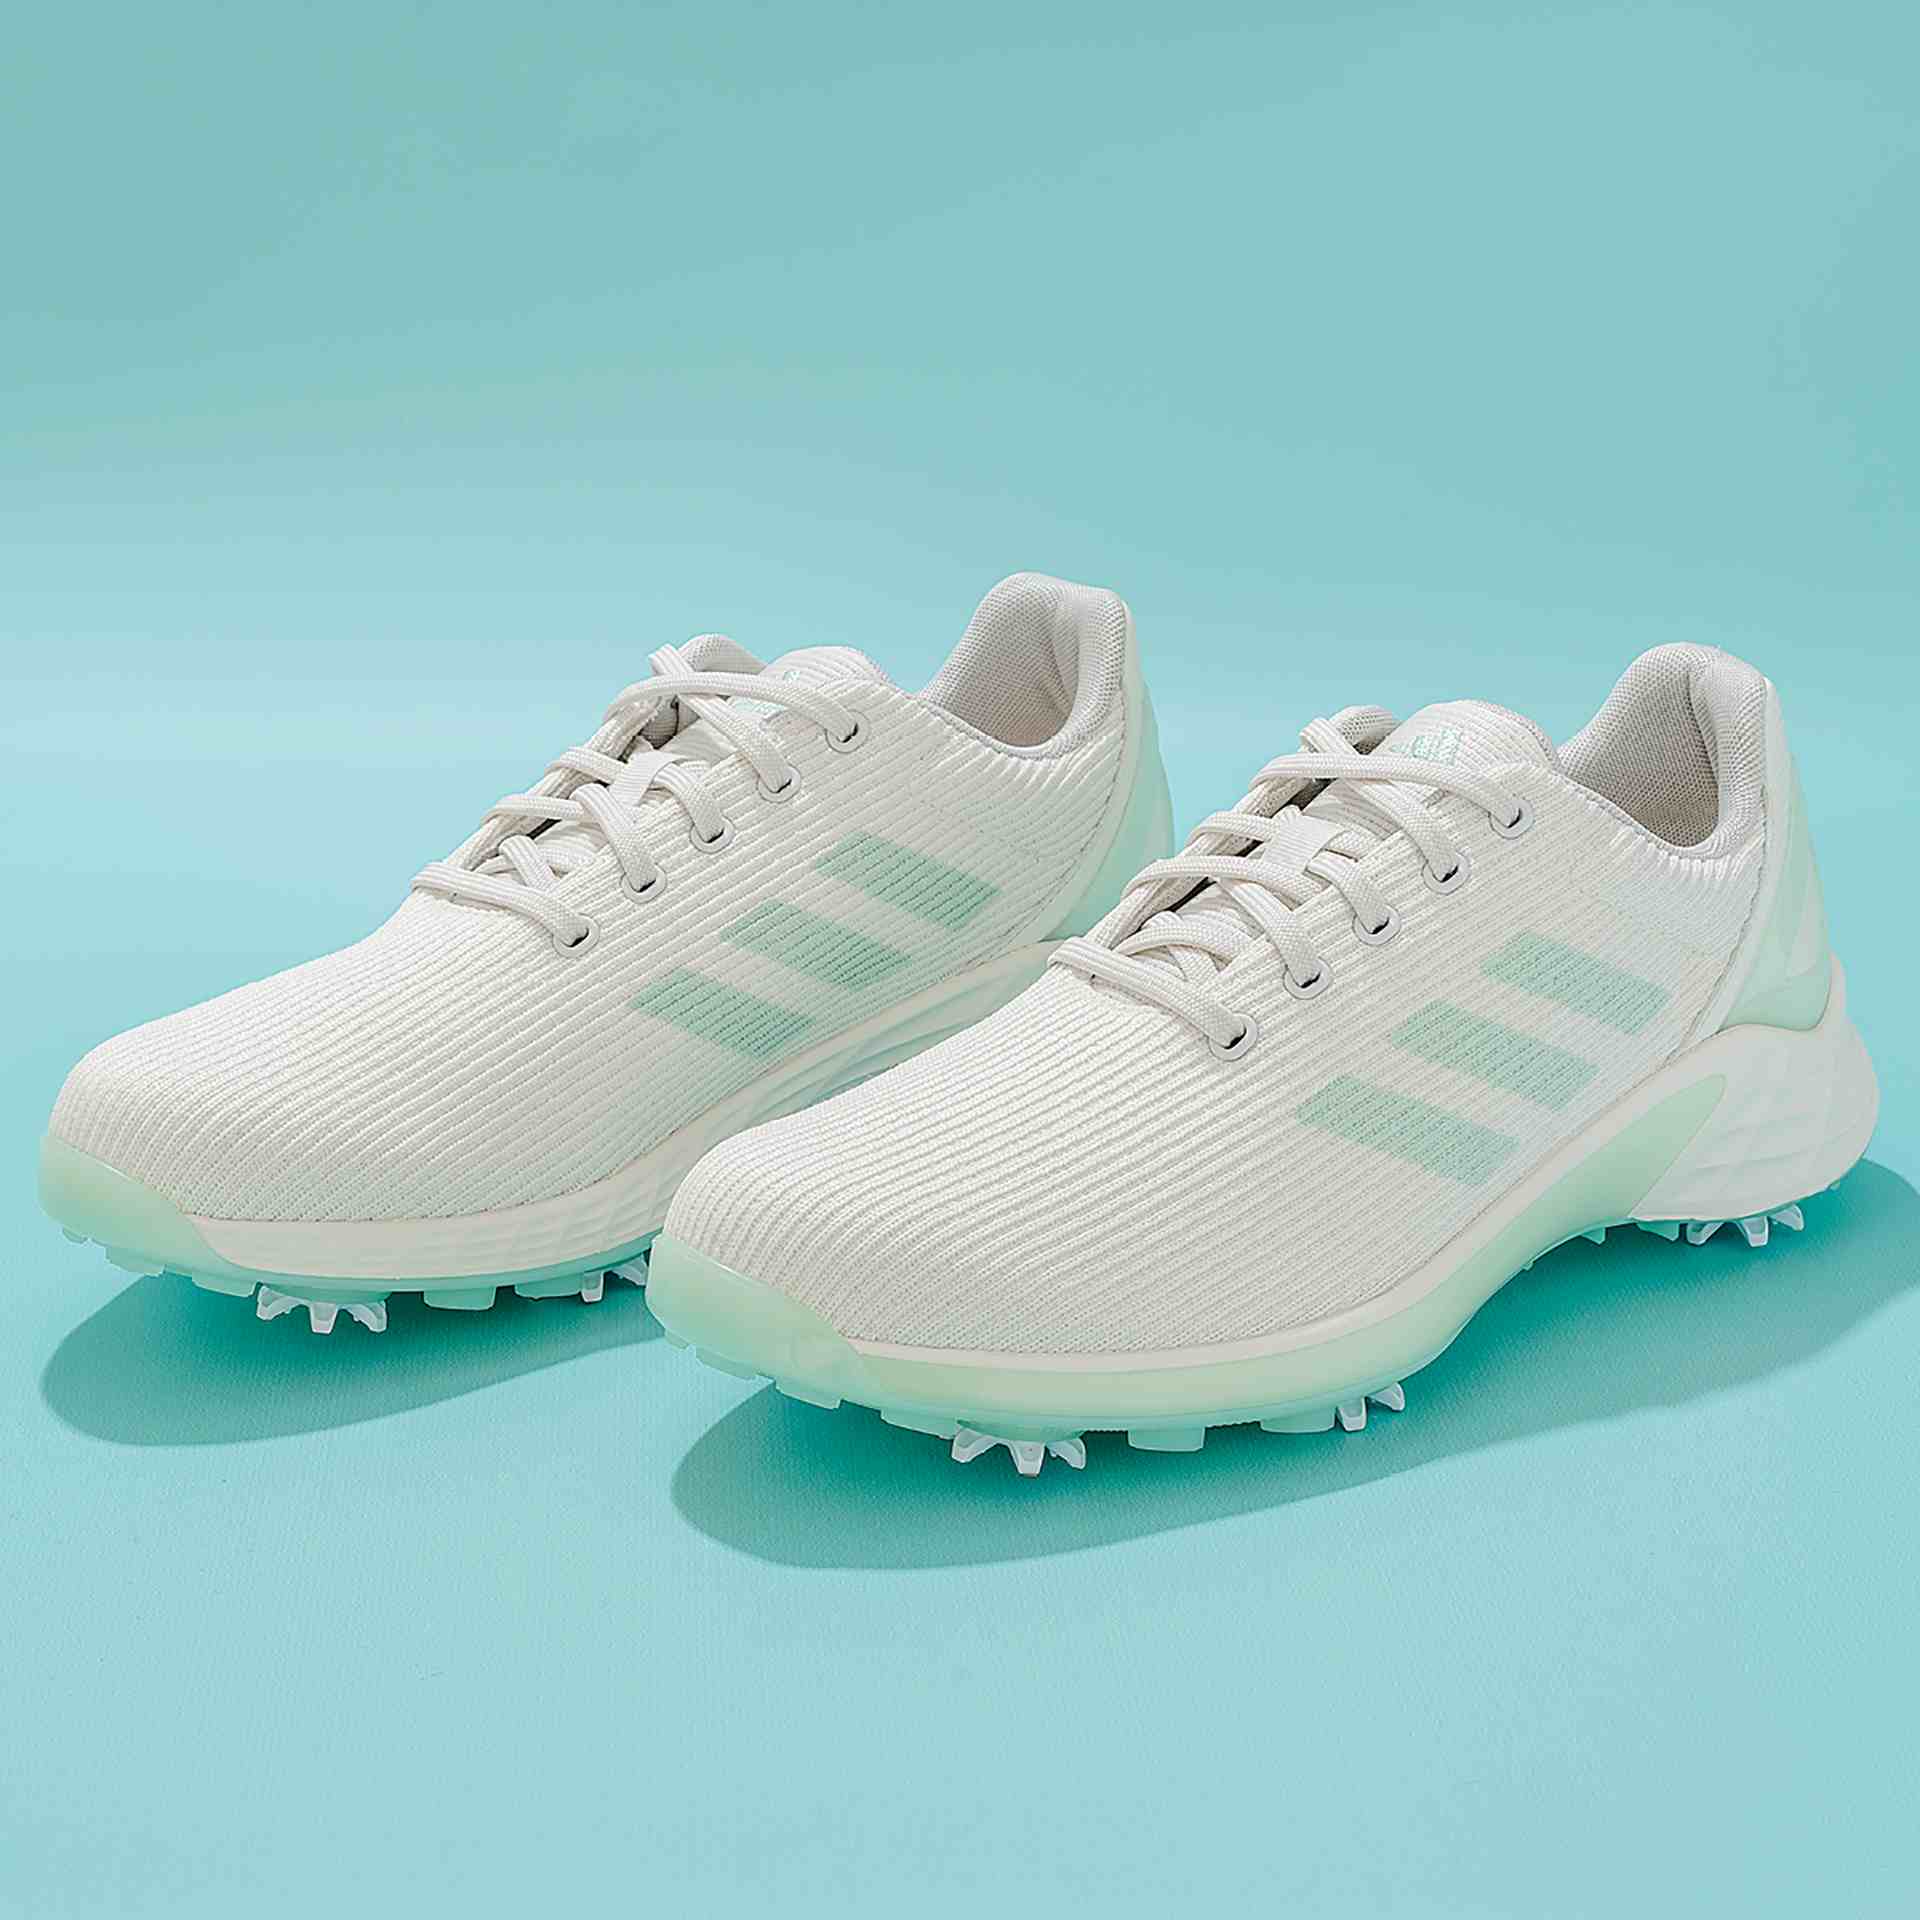 adicross zx primeblue pair - Adidas 推出一款节约水能源的无染料No-Dye高尔夫球鞋系列